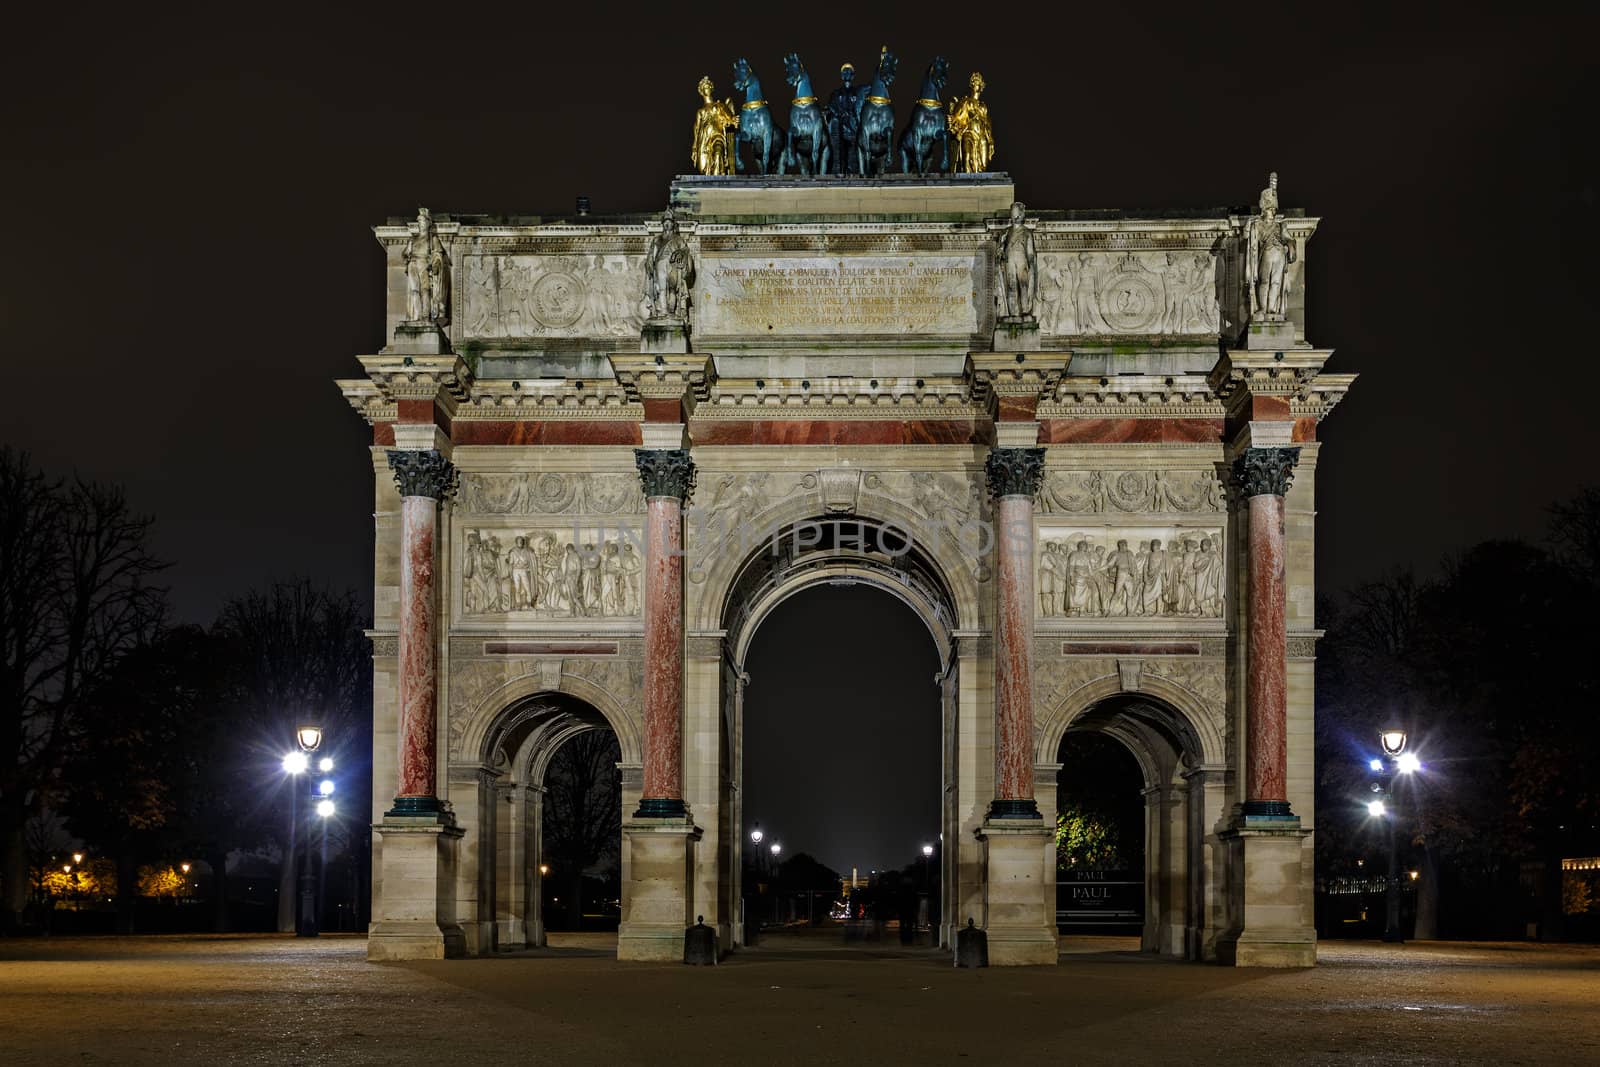 PARIS-NOV 10:Triumphal Arch (Arc de Triomphe du Carrousel) at Tuileries gardens in Paris,France on Nov 10,2012. The monument was built between 1806-1808 to commemorate Napoleon's military victories